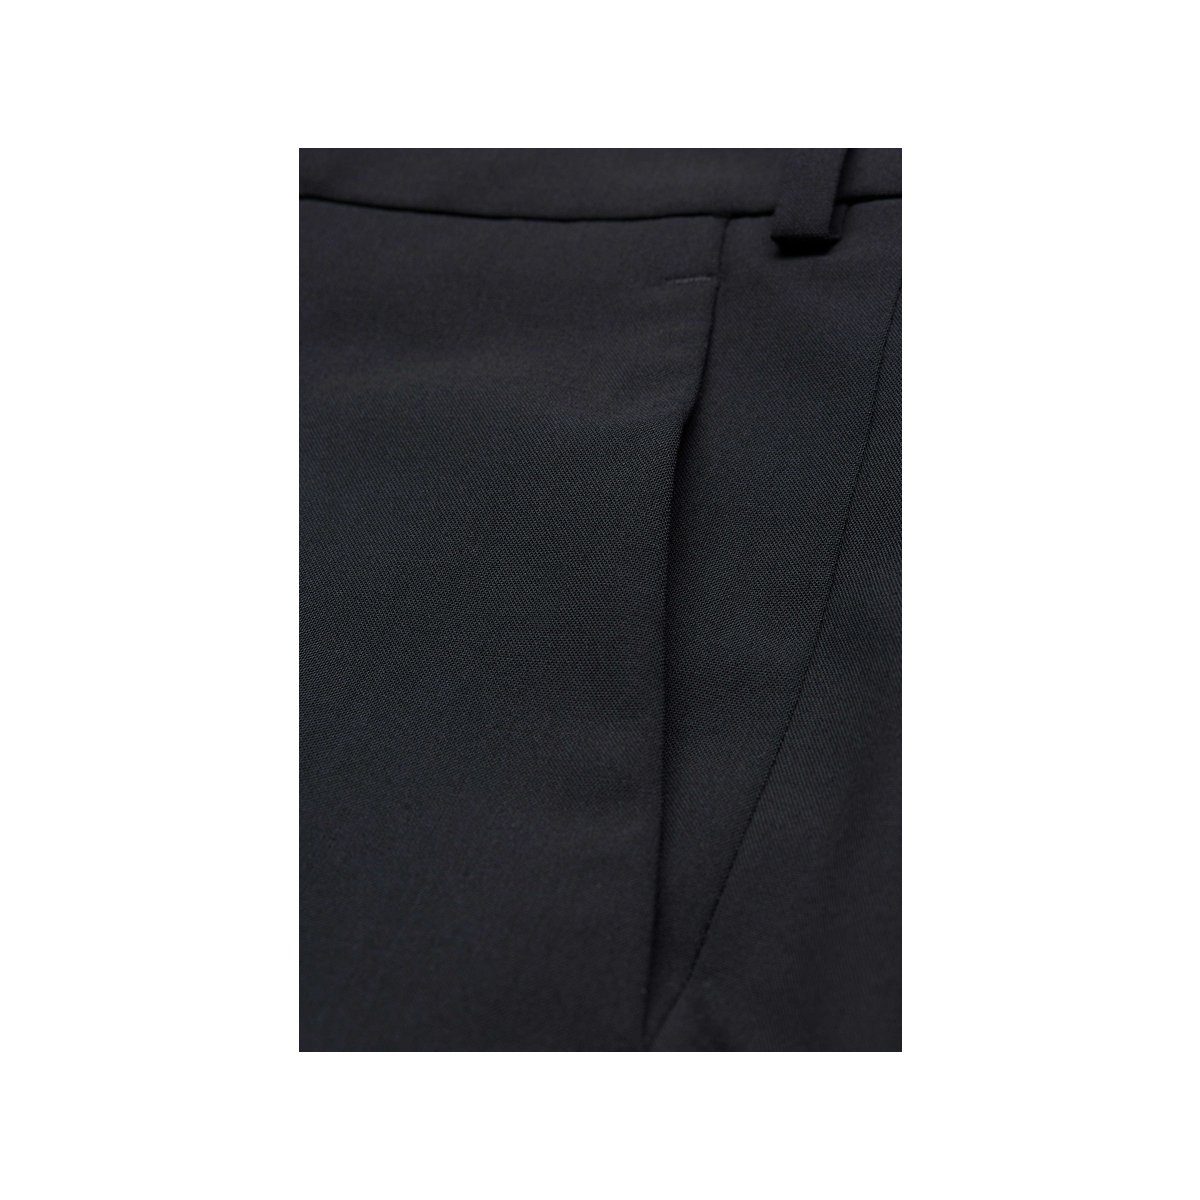 Digel keine Angabe) (1-tlg., schwarz Anzughose gerade